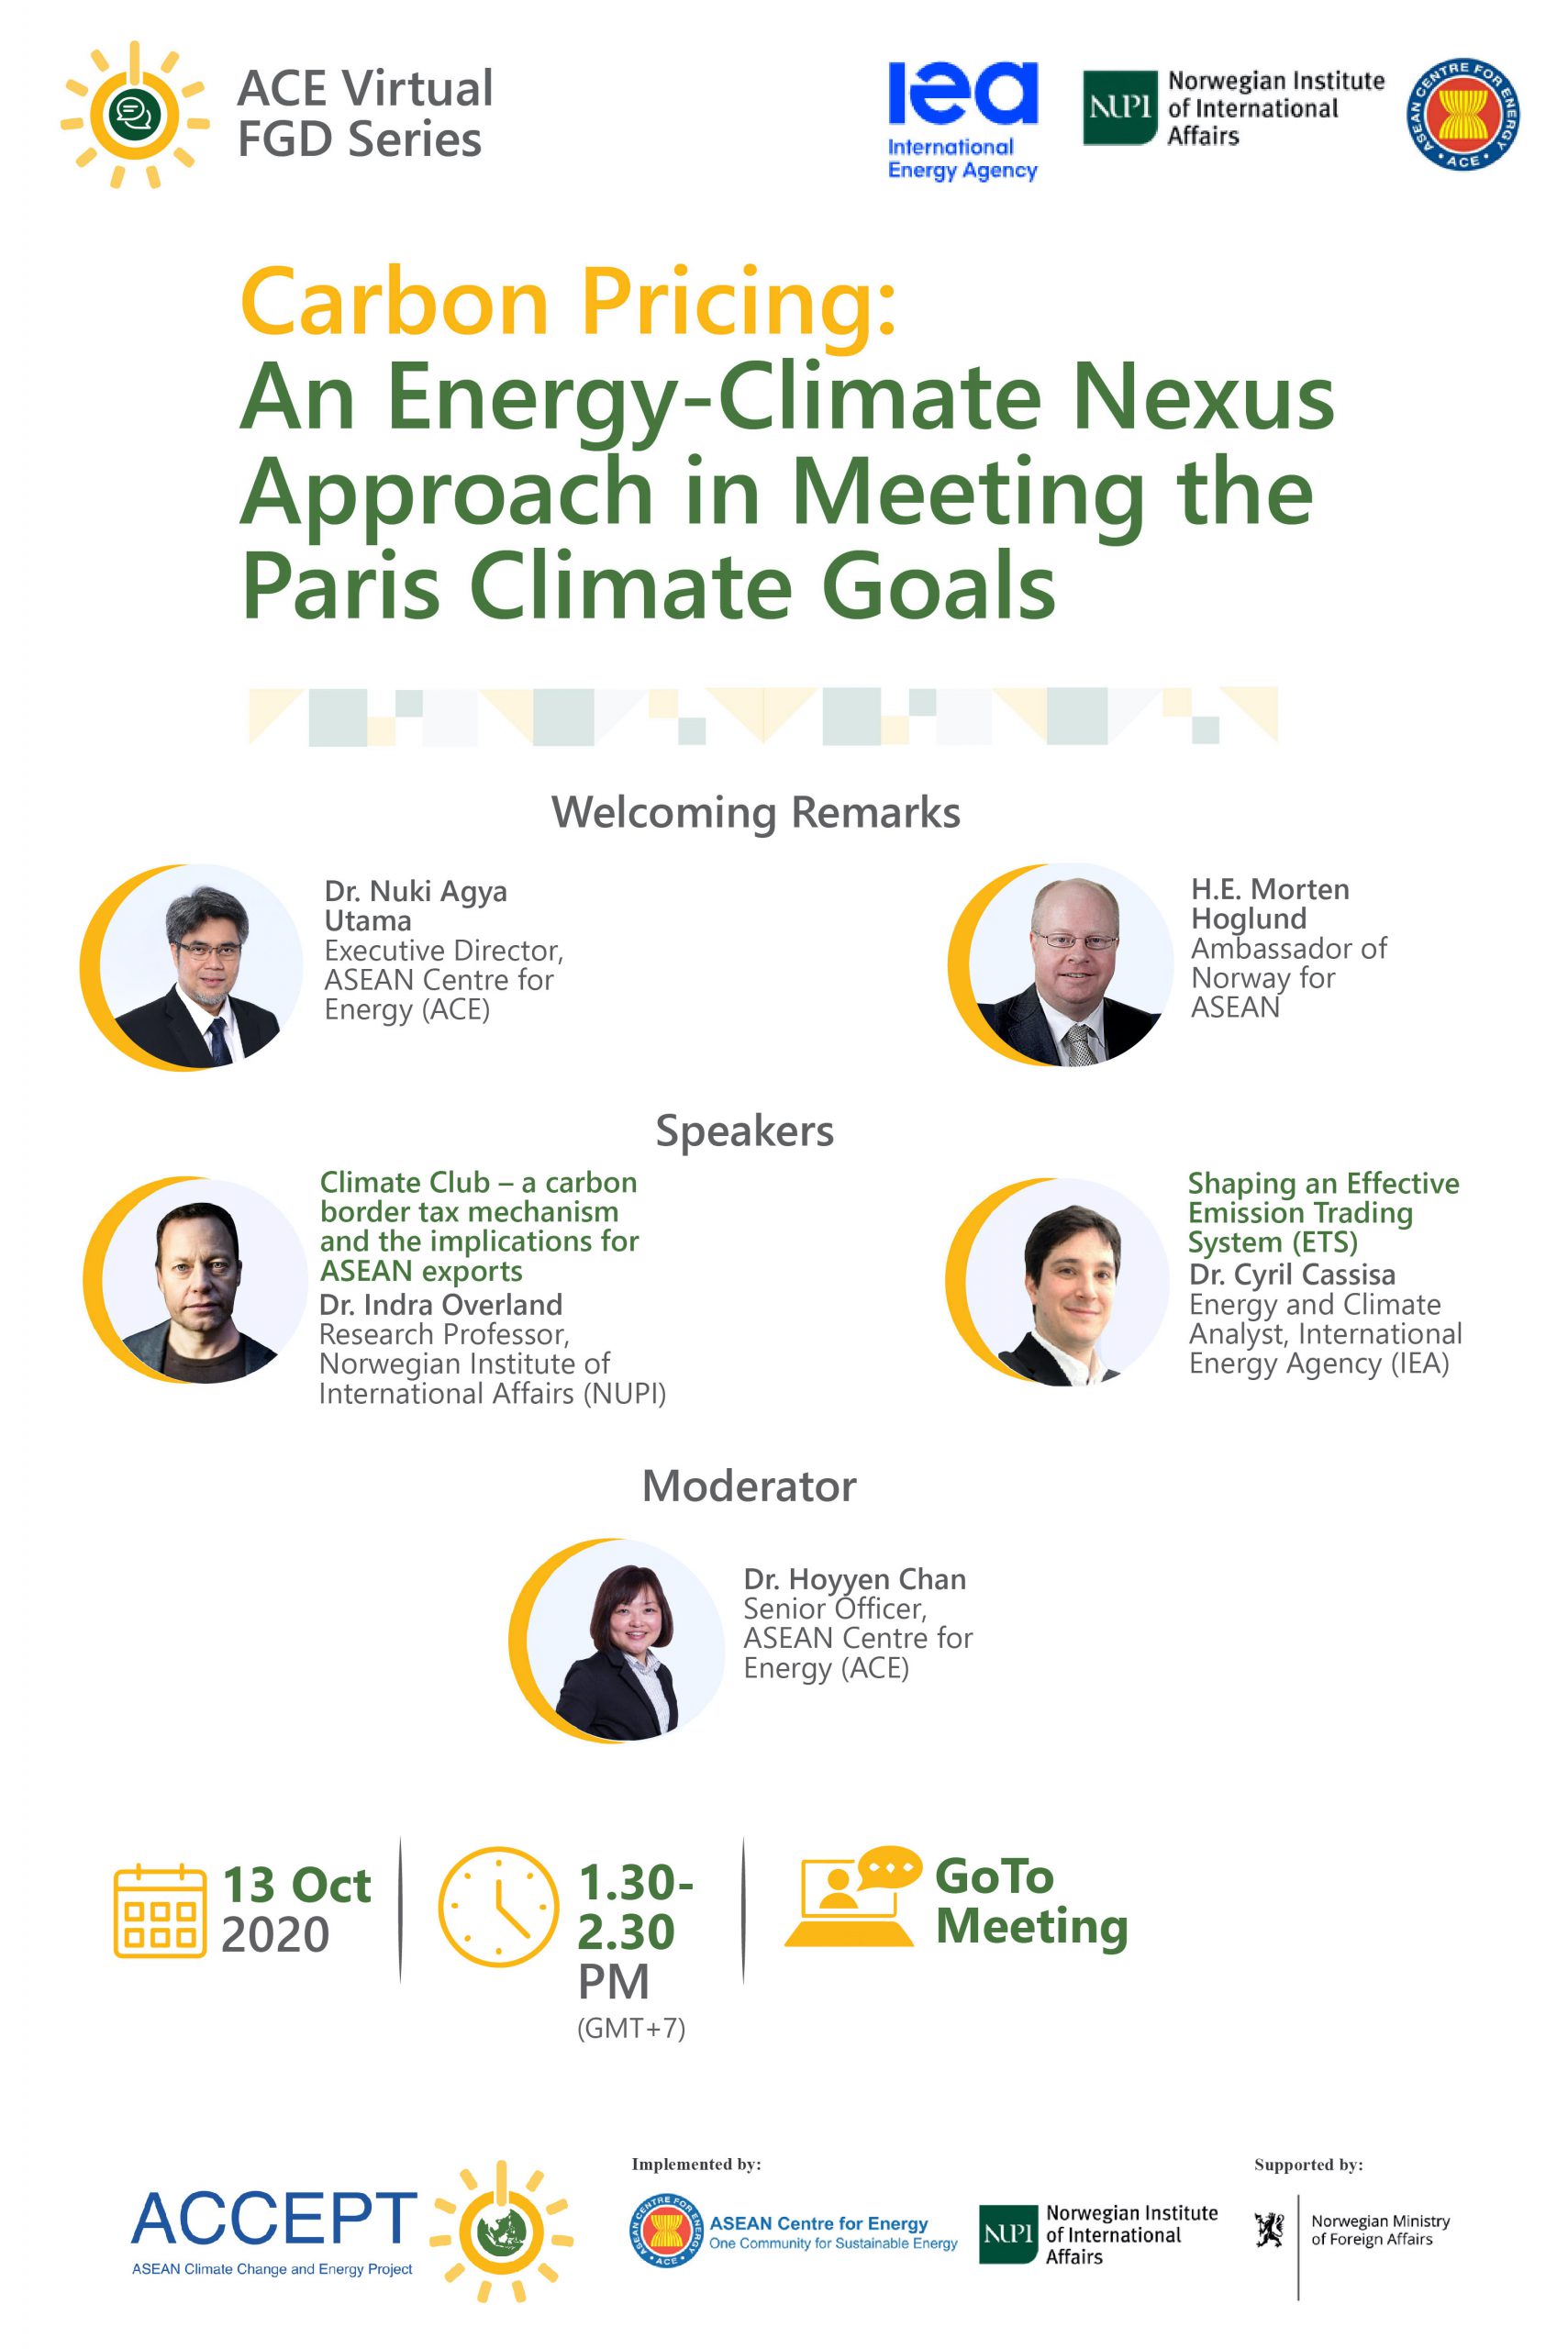 Carbon Pricing for Meeting Paris Climate Goals